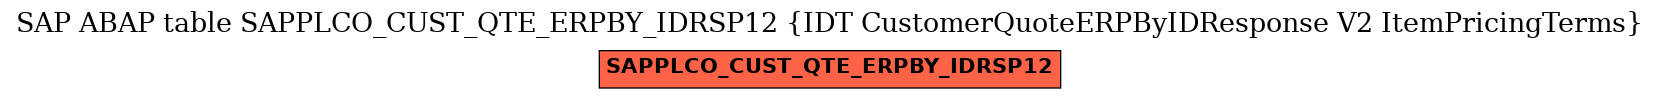 E-R Diagram for table SAPPLCO_CUST_QTE_ERPBY_IDRSP12 (IDT CustomerQuoteERPByIDResponse V2 ItemPricingTerms)